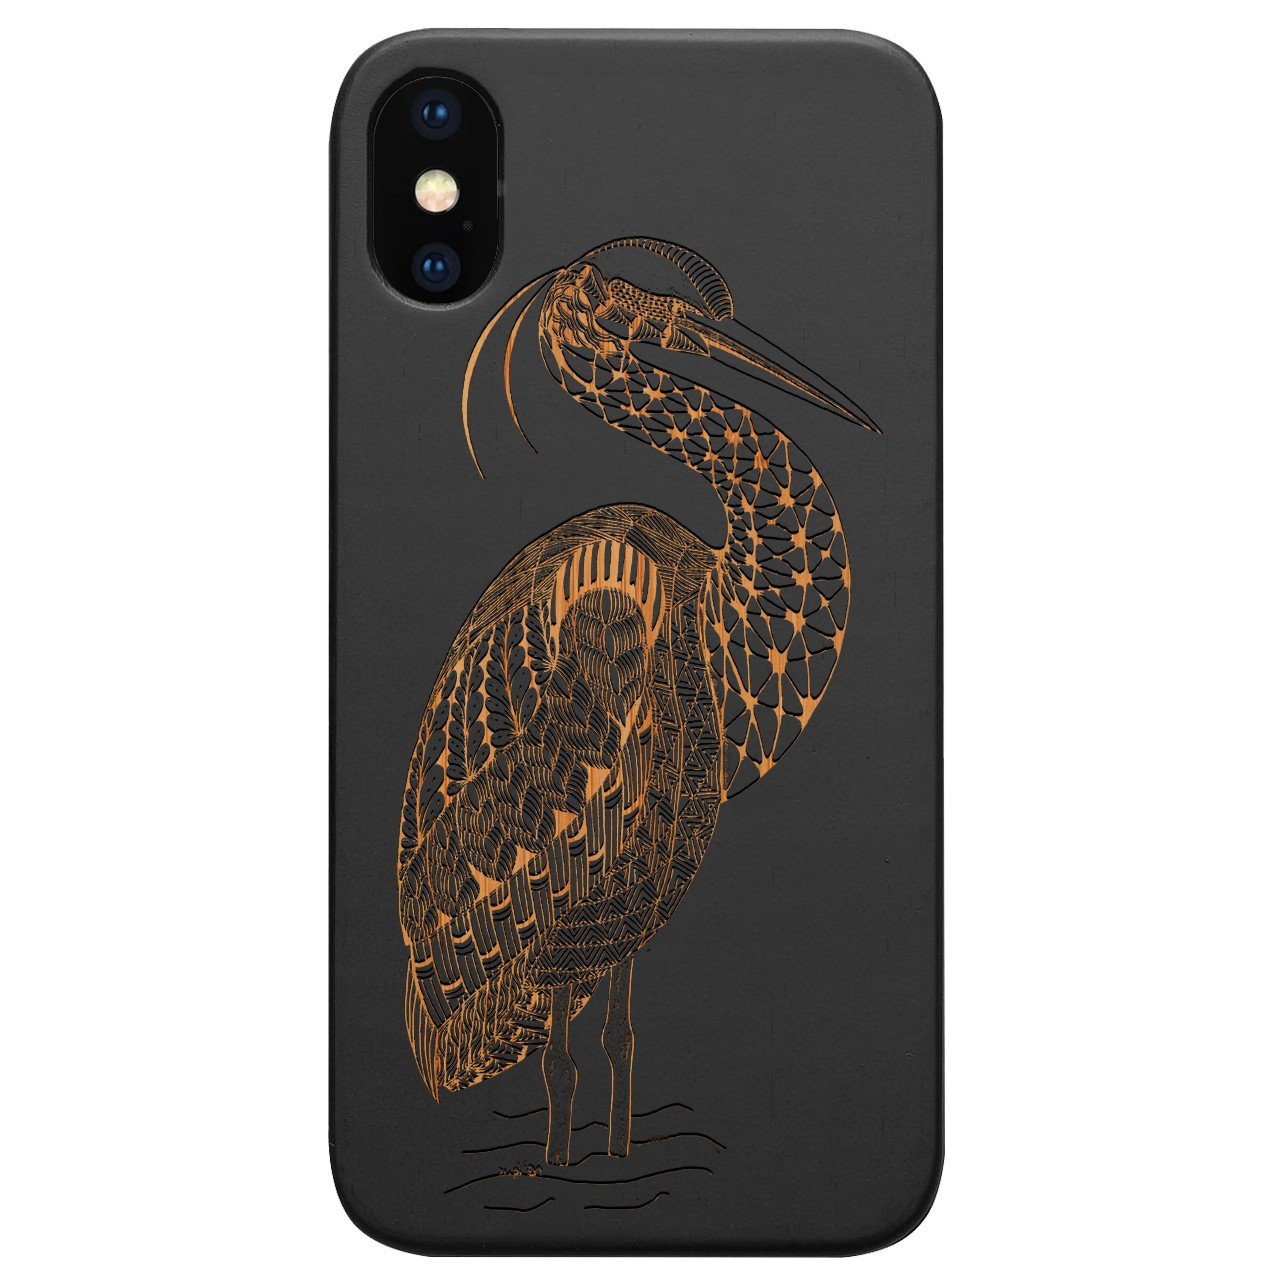 Bird Mandala - Engraved - Wooden Phone Case